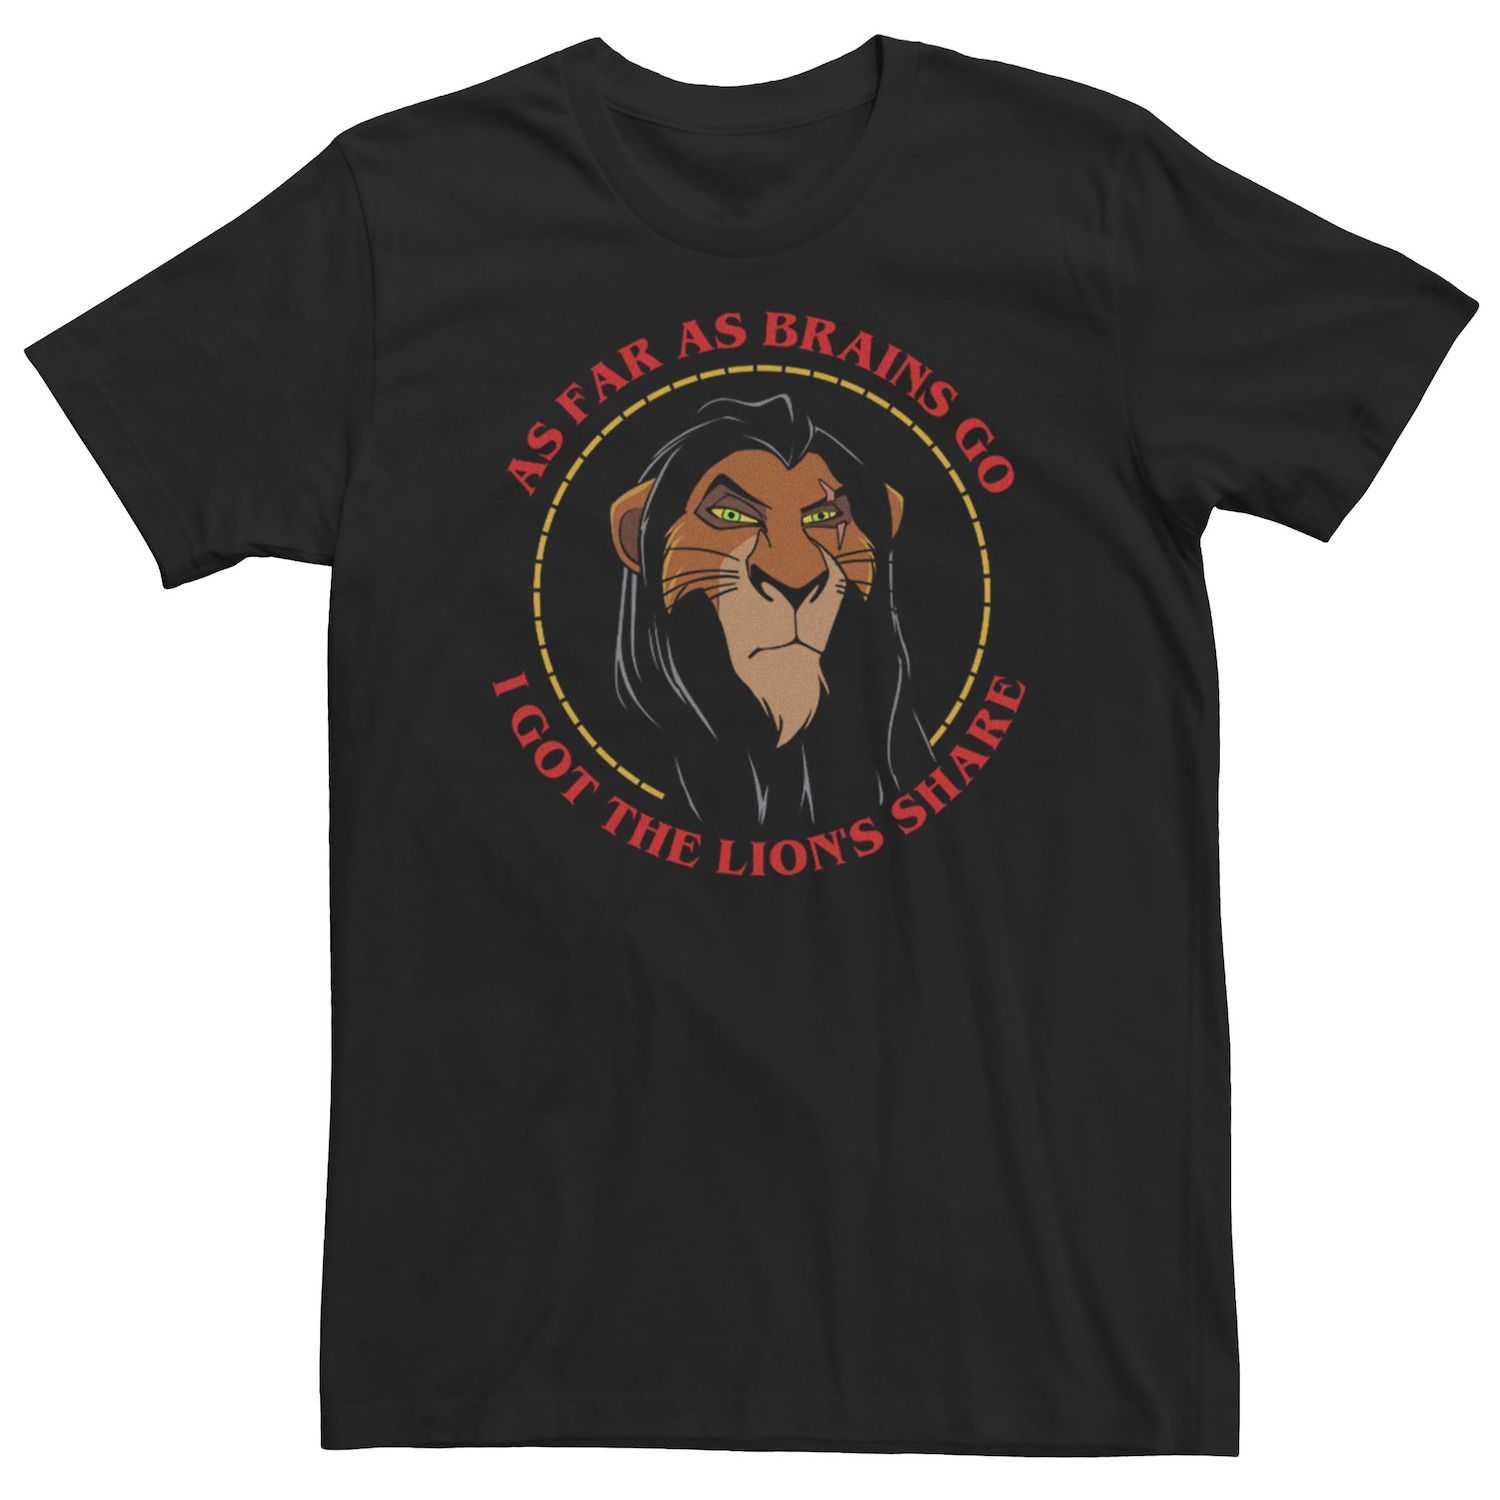 lions share cd lions share two Мужская футболка со шрамом «Король Лев» Насколько мозги идут I Got Lions Share Disney